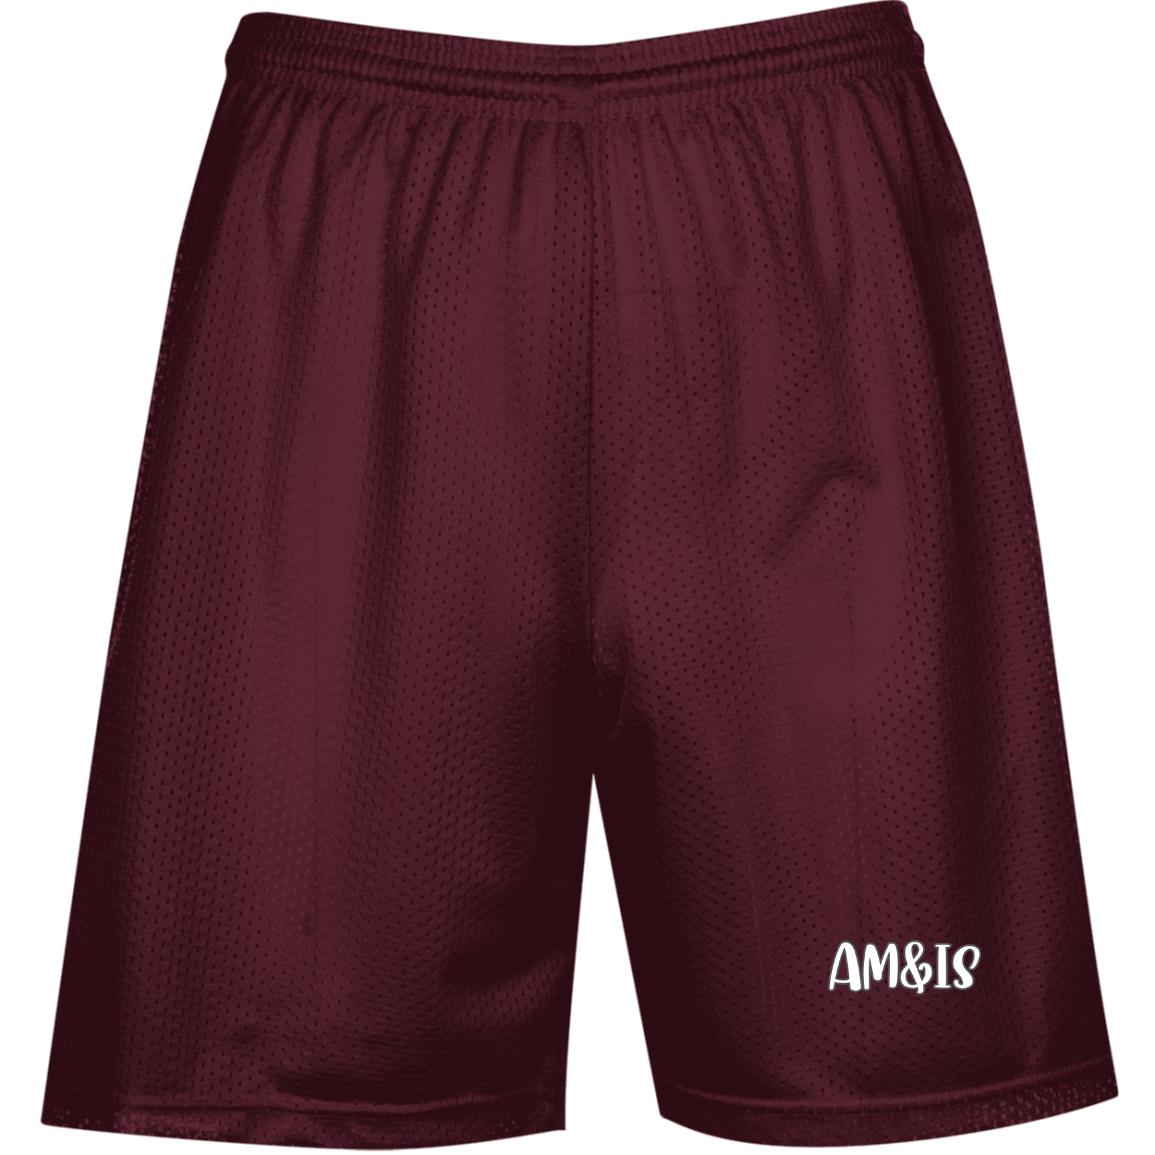 MAROON Am&IS Activewear Performance Mesh Shorts - men's shorts at TFC&H Co.